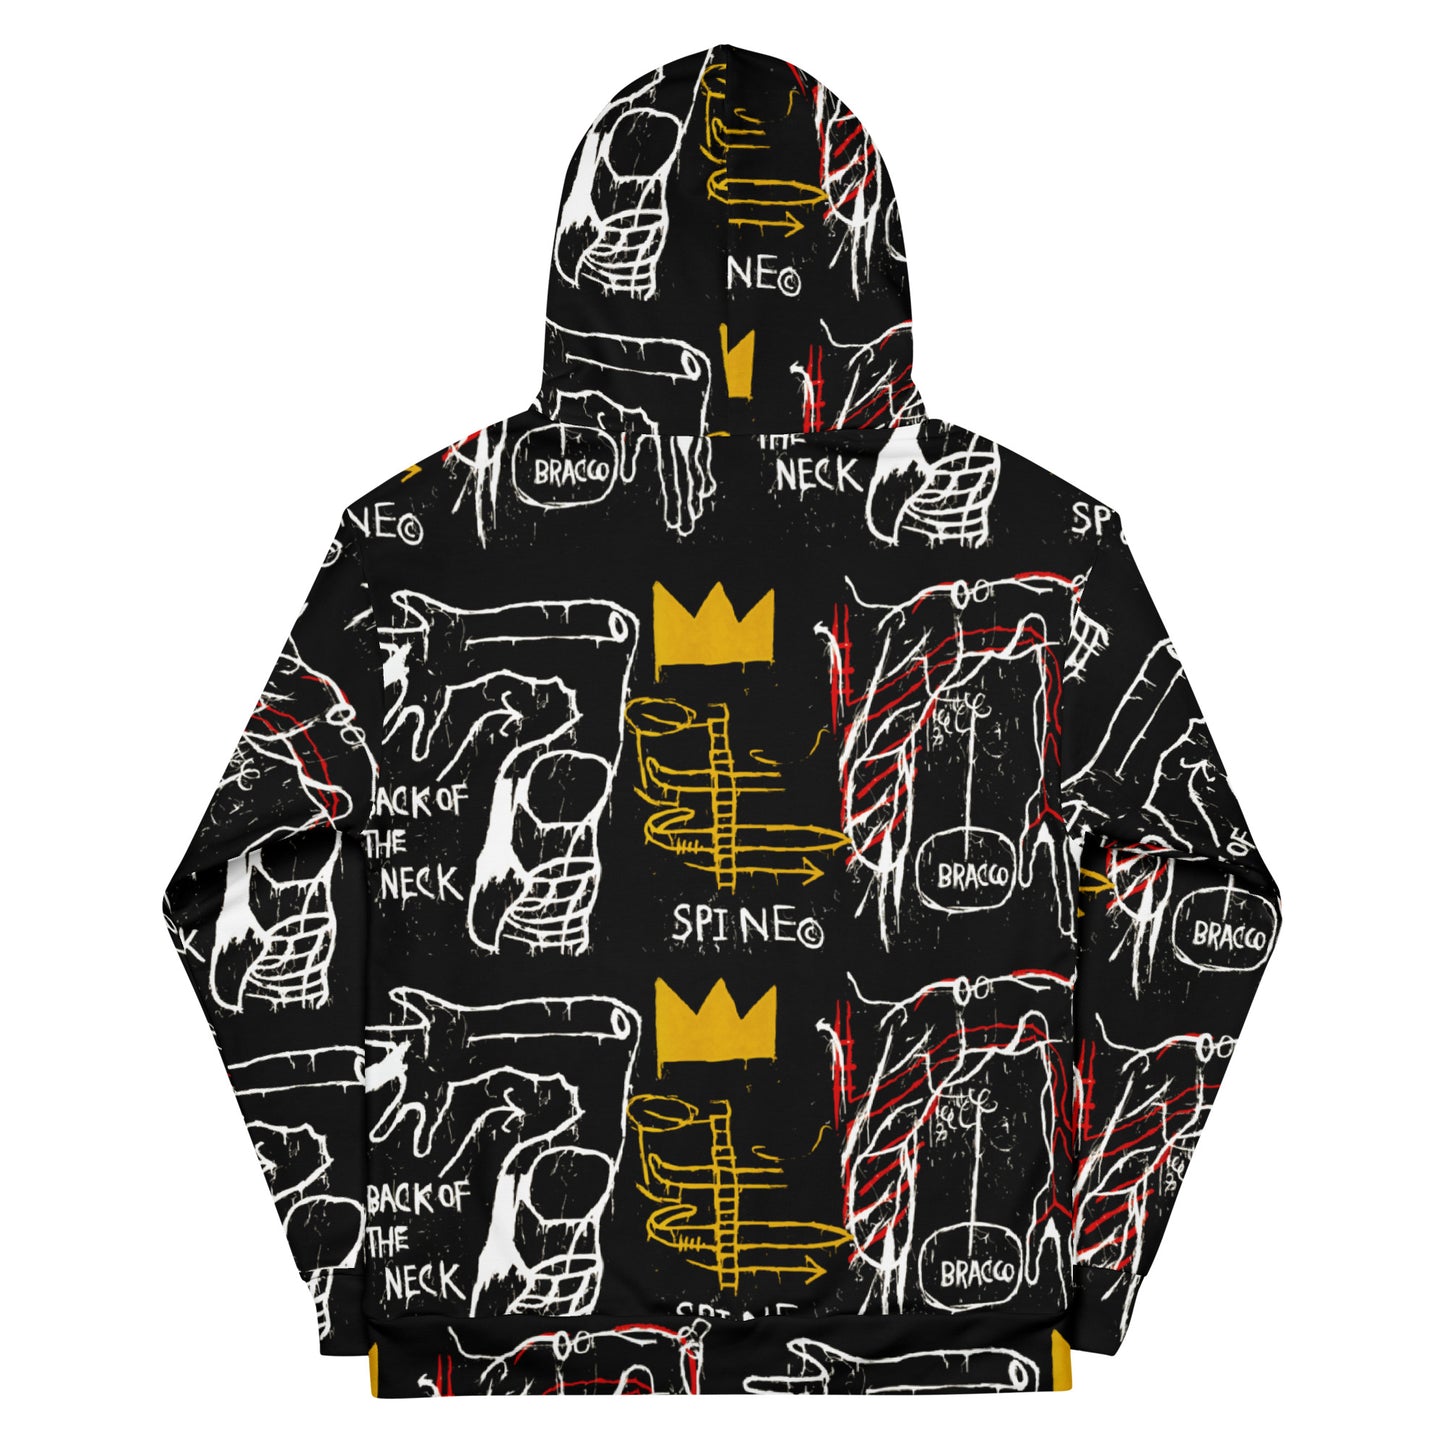 Jean-Michel Basquiat "Back of the Neck" Artwork Printed Premium Streetwear Sweatshirt Hoodie Black Graffiti Harajuku